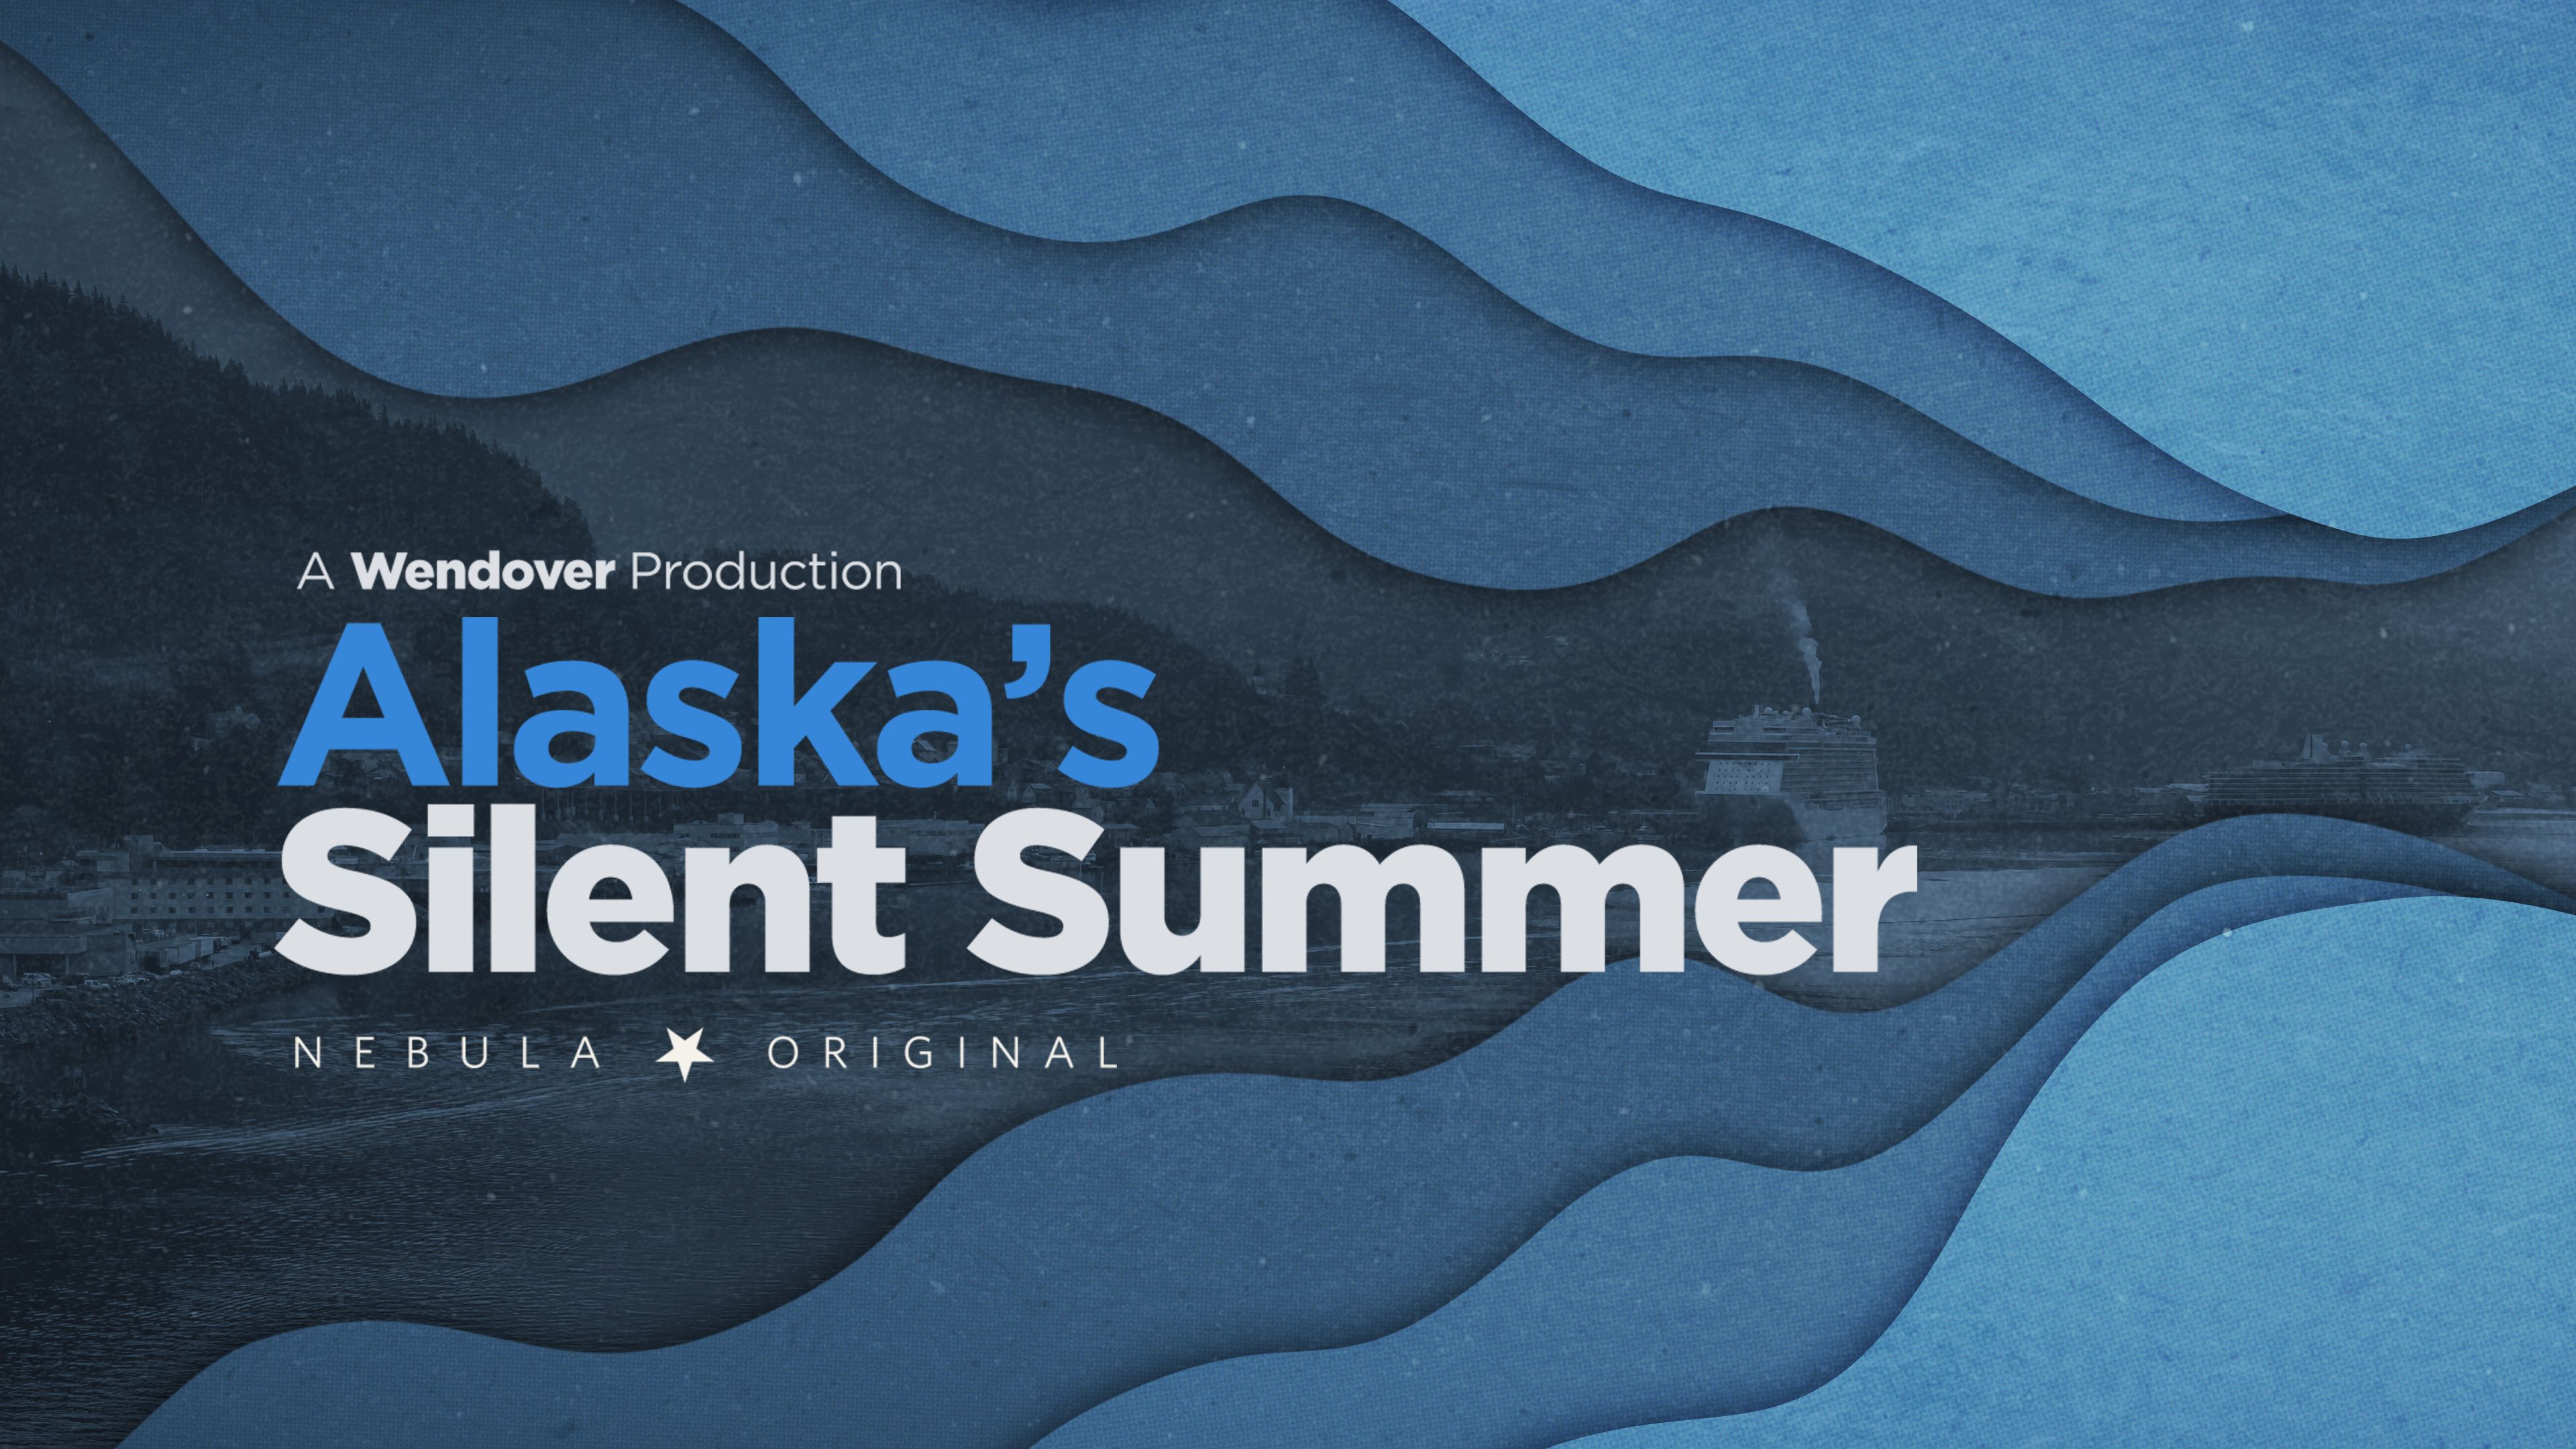 Alaska’s Silent Summer